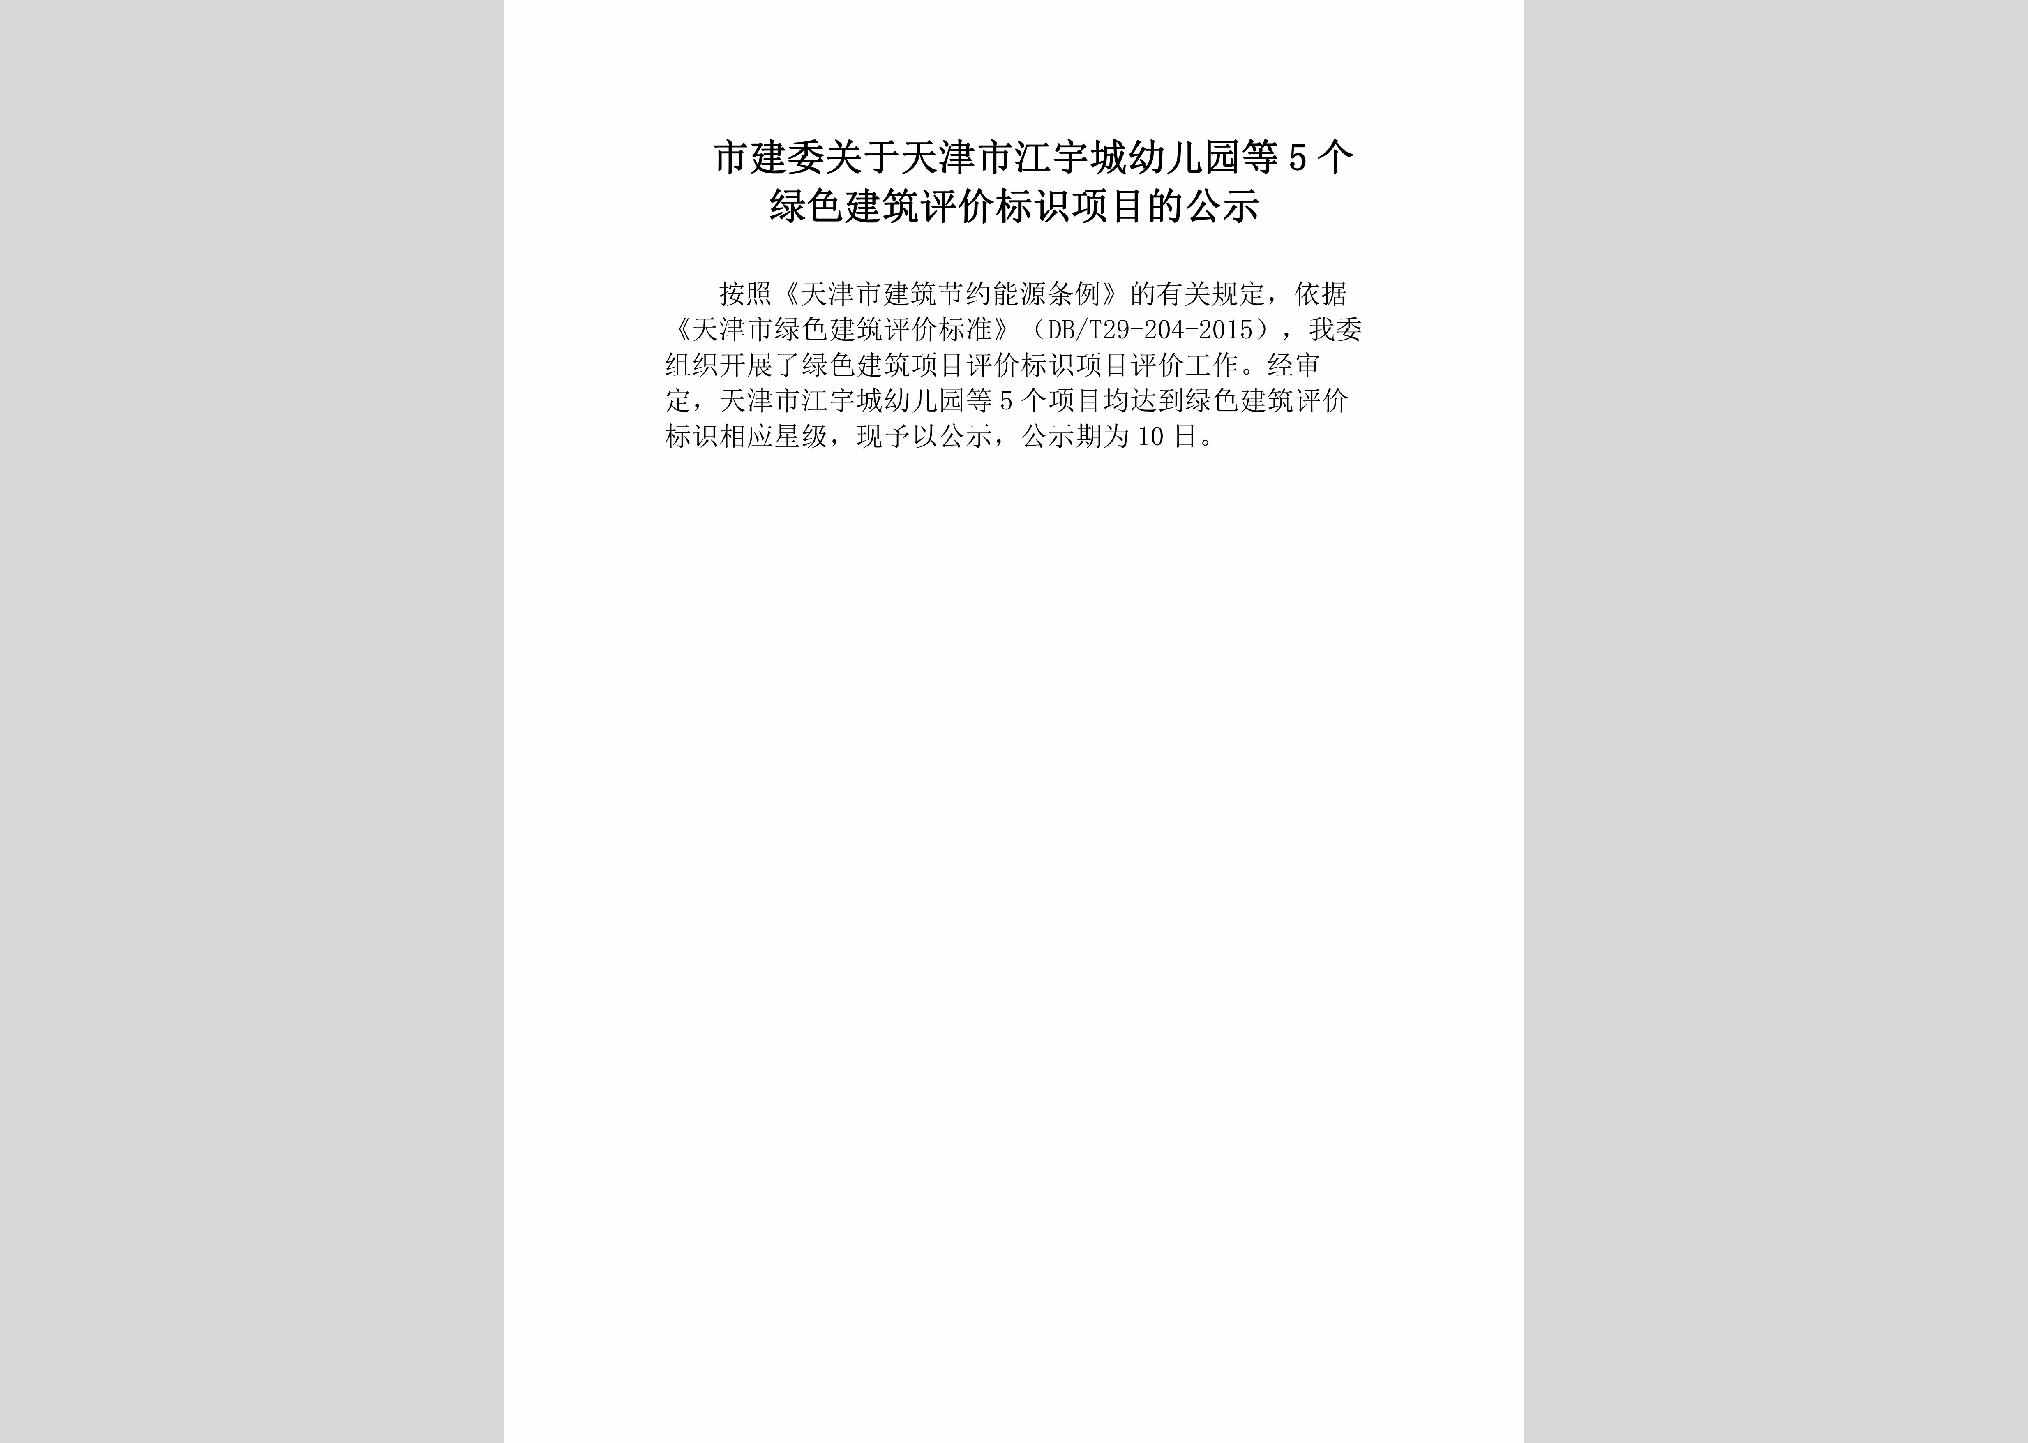 TJ-ZJMDECGS-2018：市建委关于天津市江宇城幼儿园等5个绿色建筑评价标识项目的公示